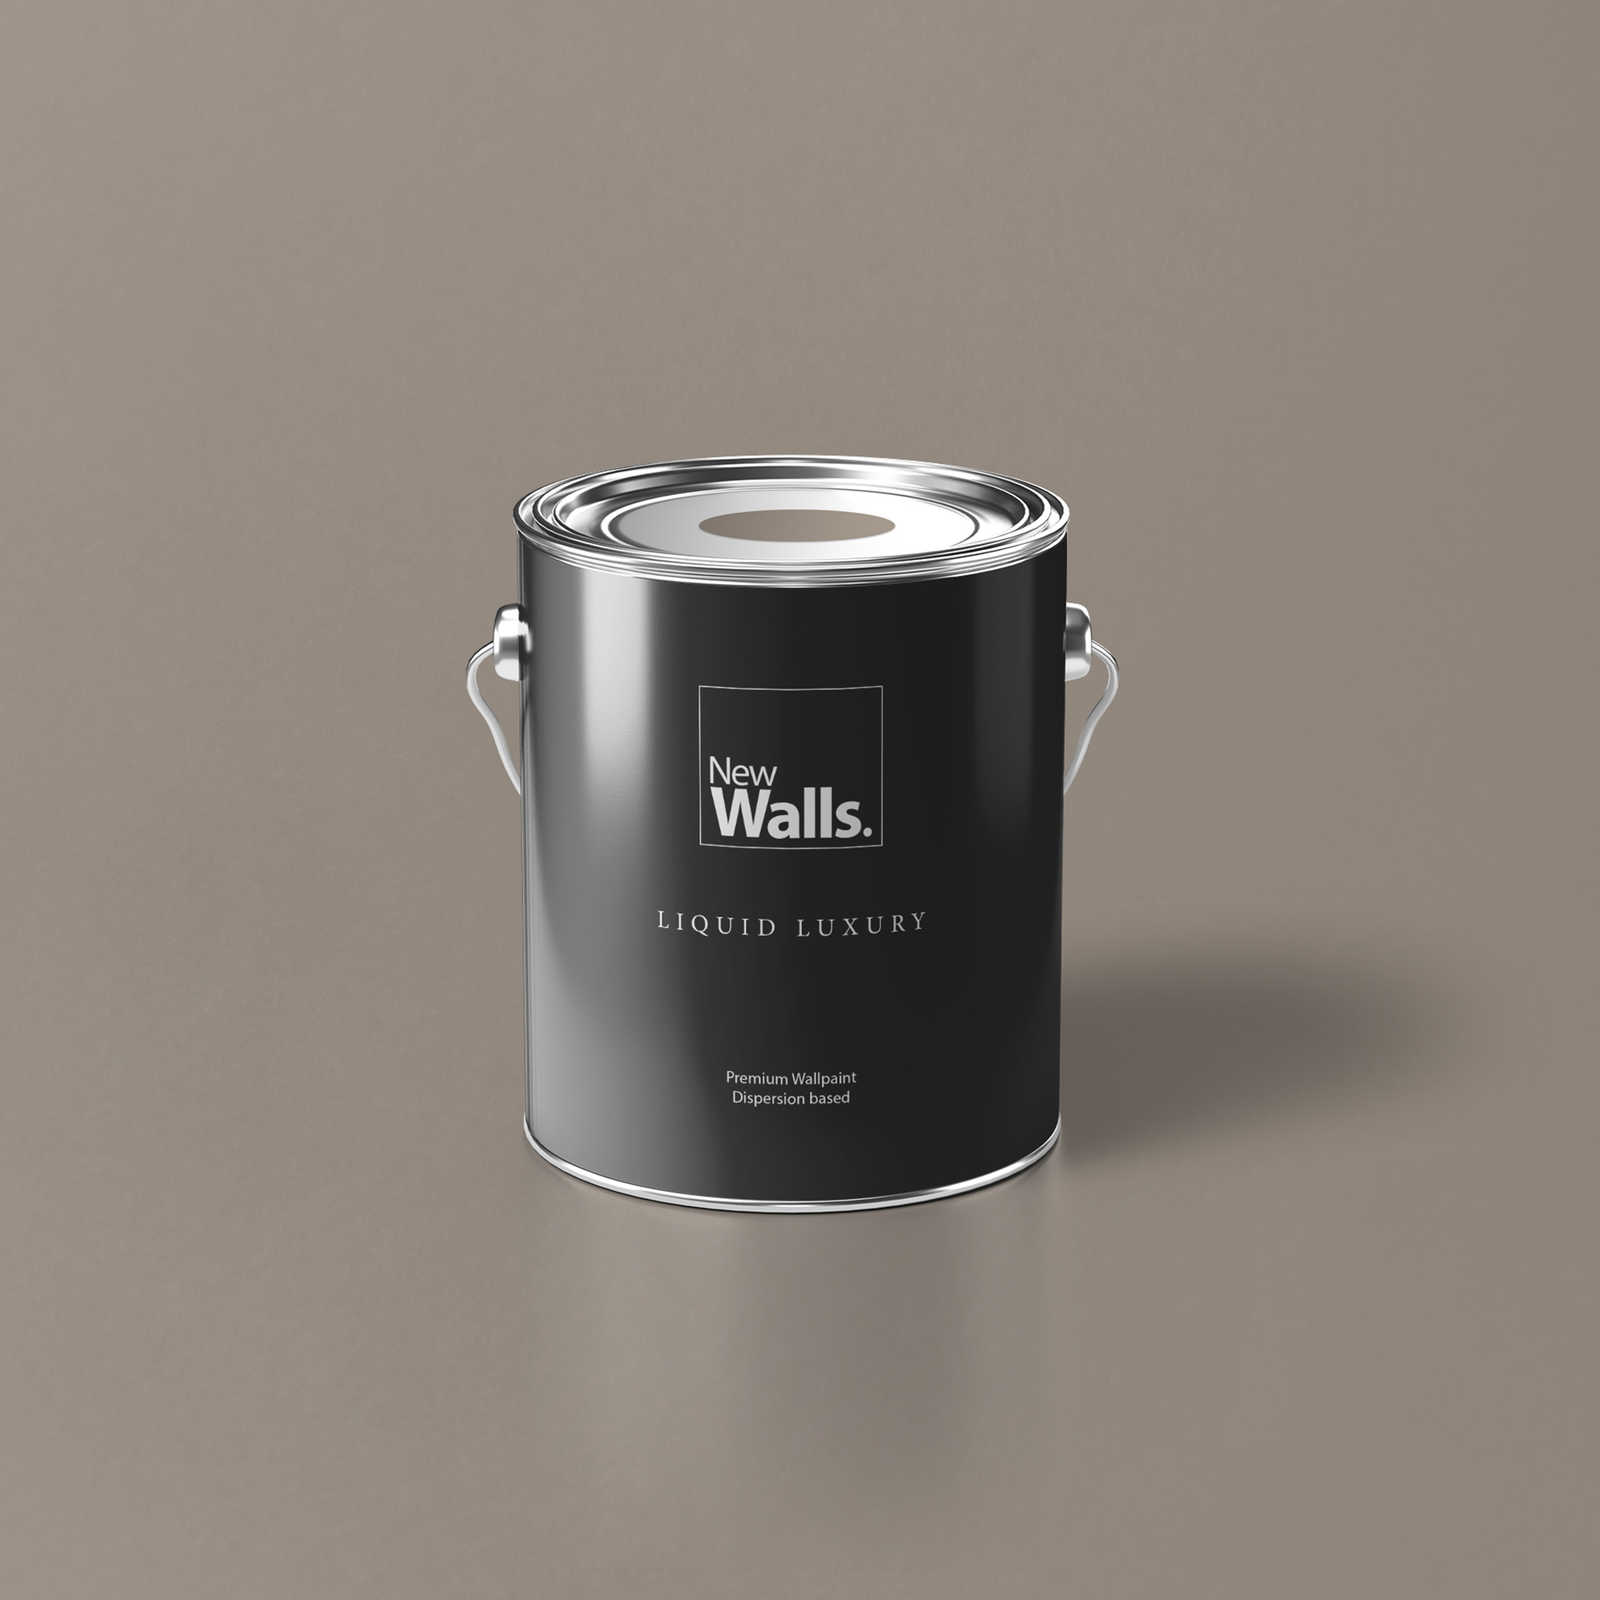 Premium Wandfarbe ausgeglichenes Taupe »Talented calm taupe« NW701 – 2,5 Liter
